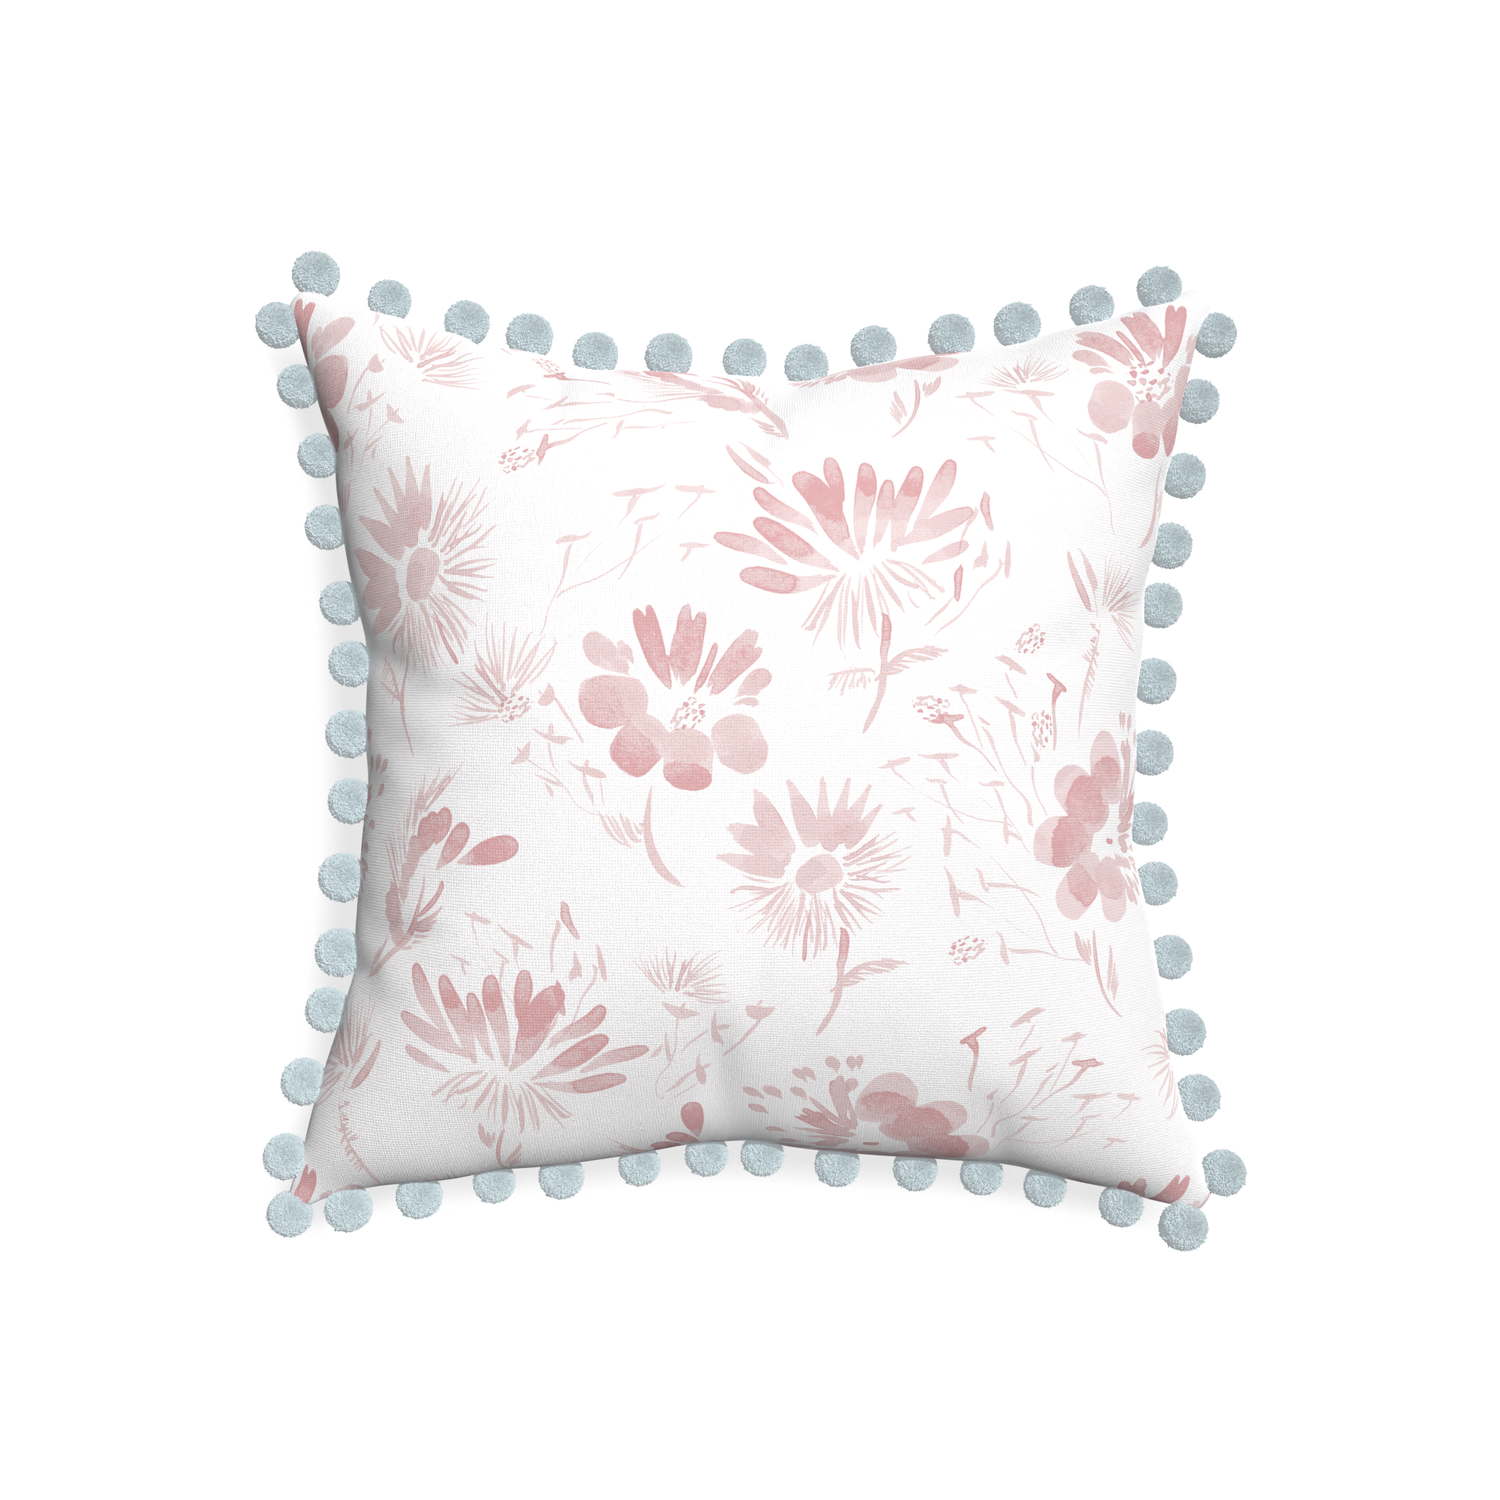 20-square blake custom pink floralpillow with powder pom pom on white background